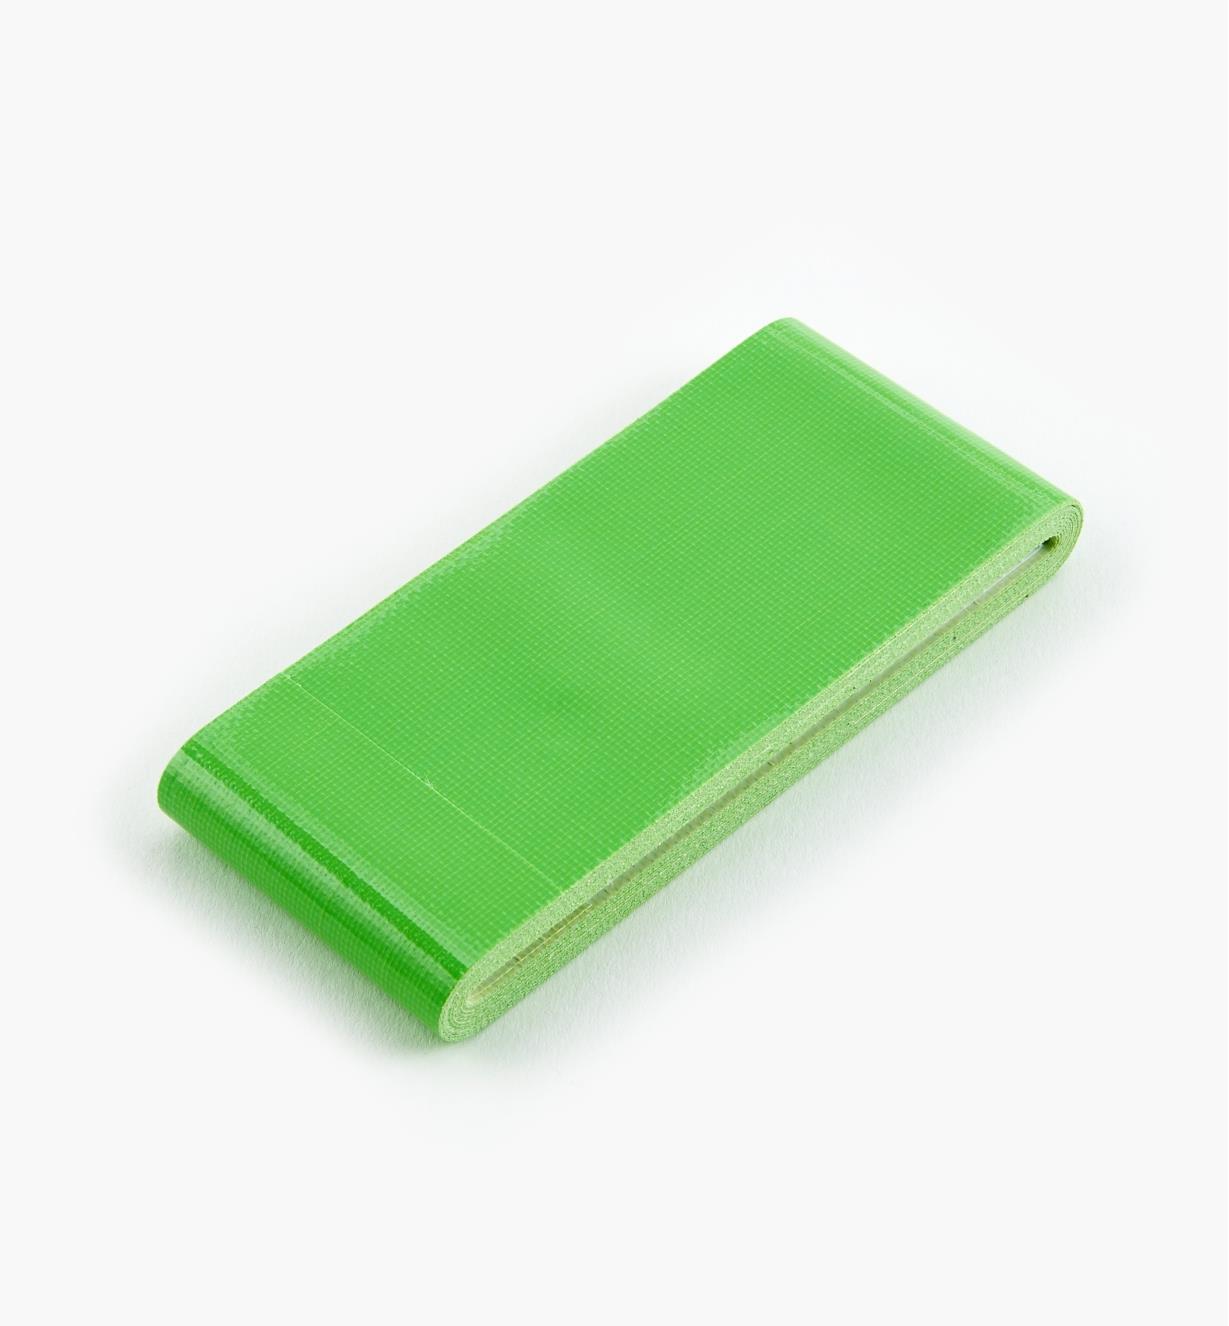 25U0625G - Green Pocket Duct Tape, 5 yd.